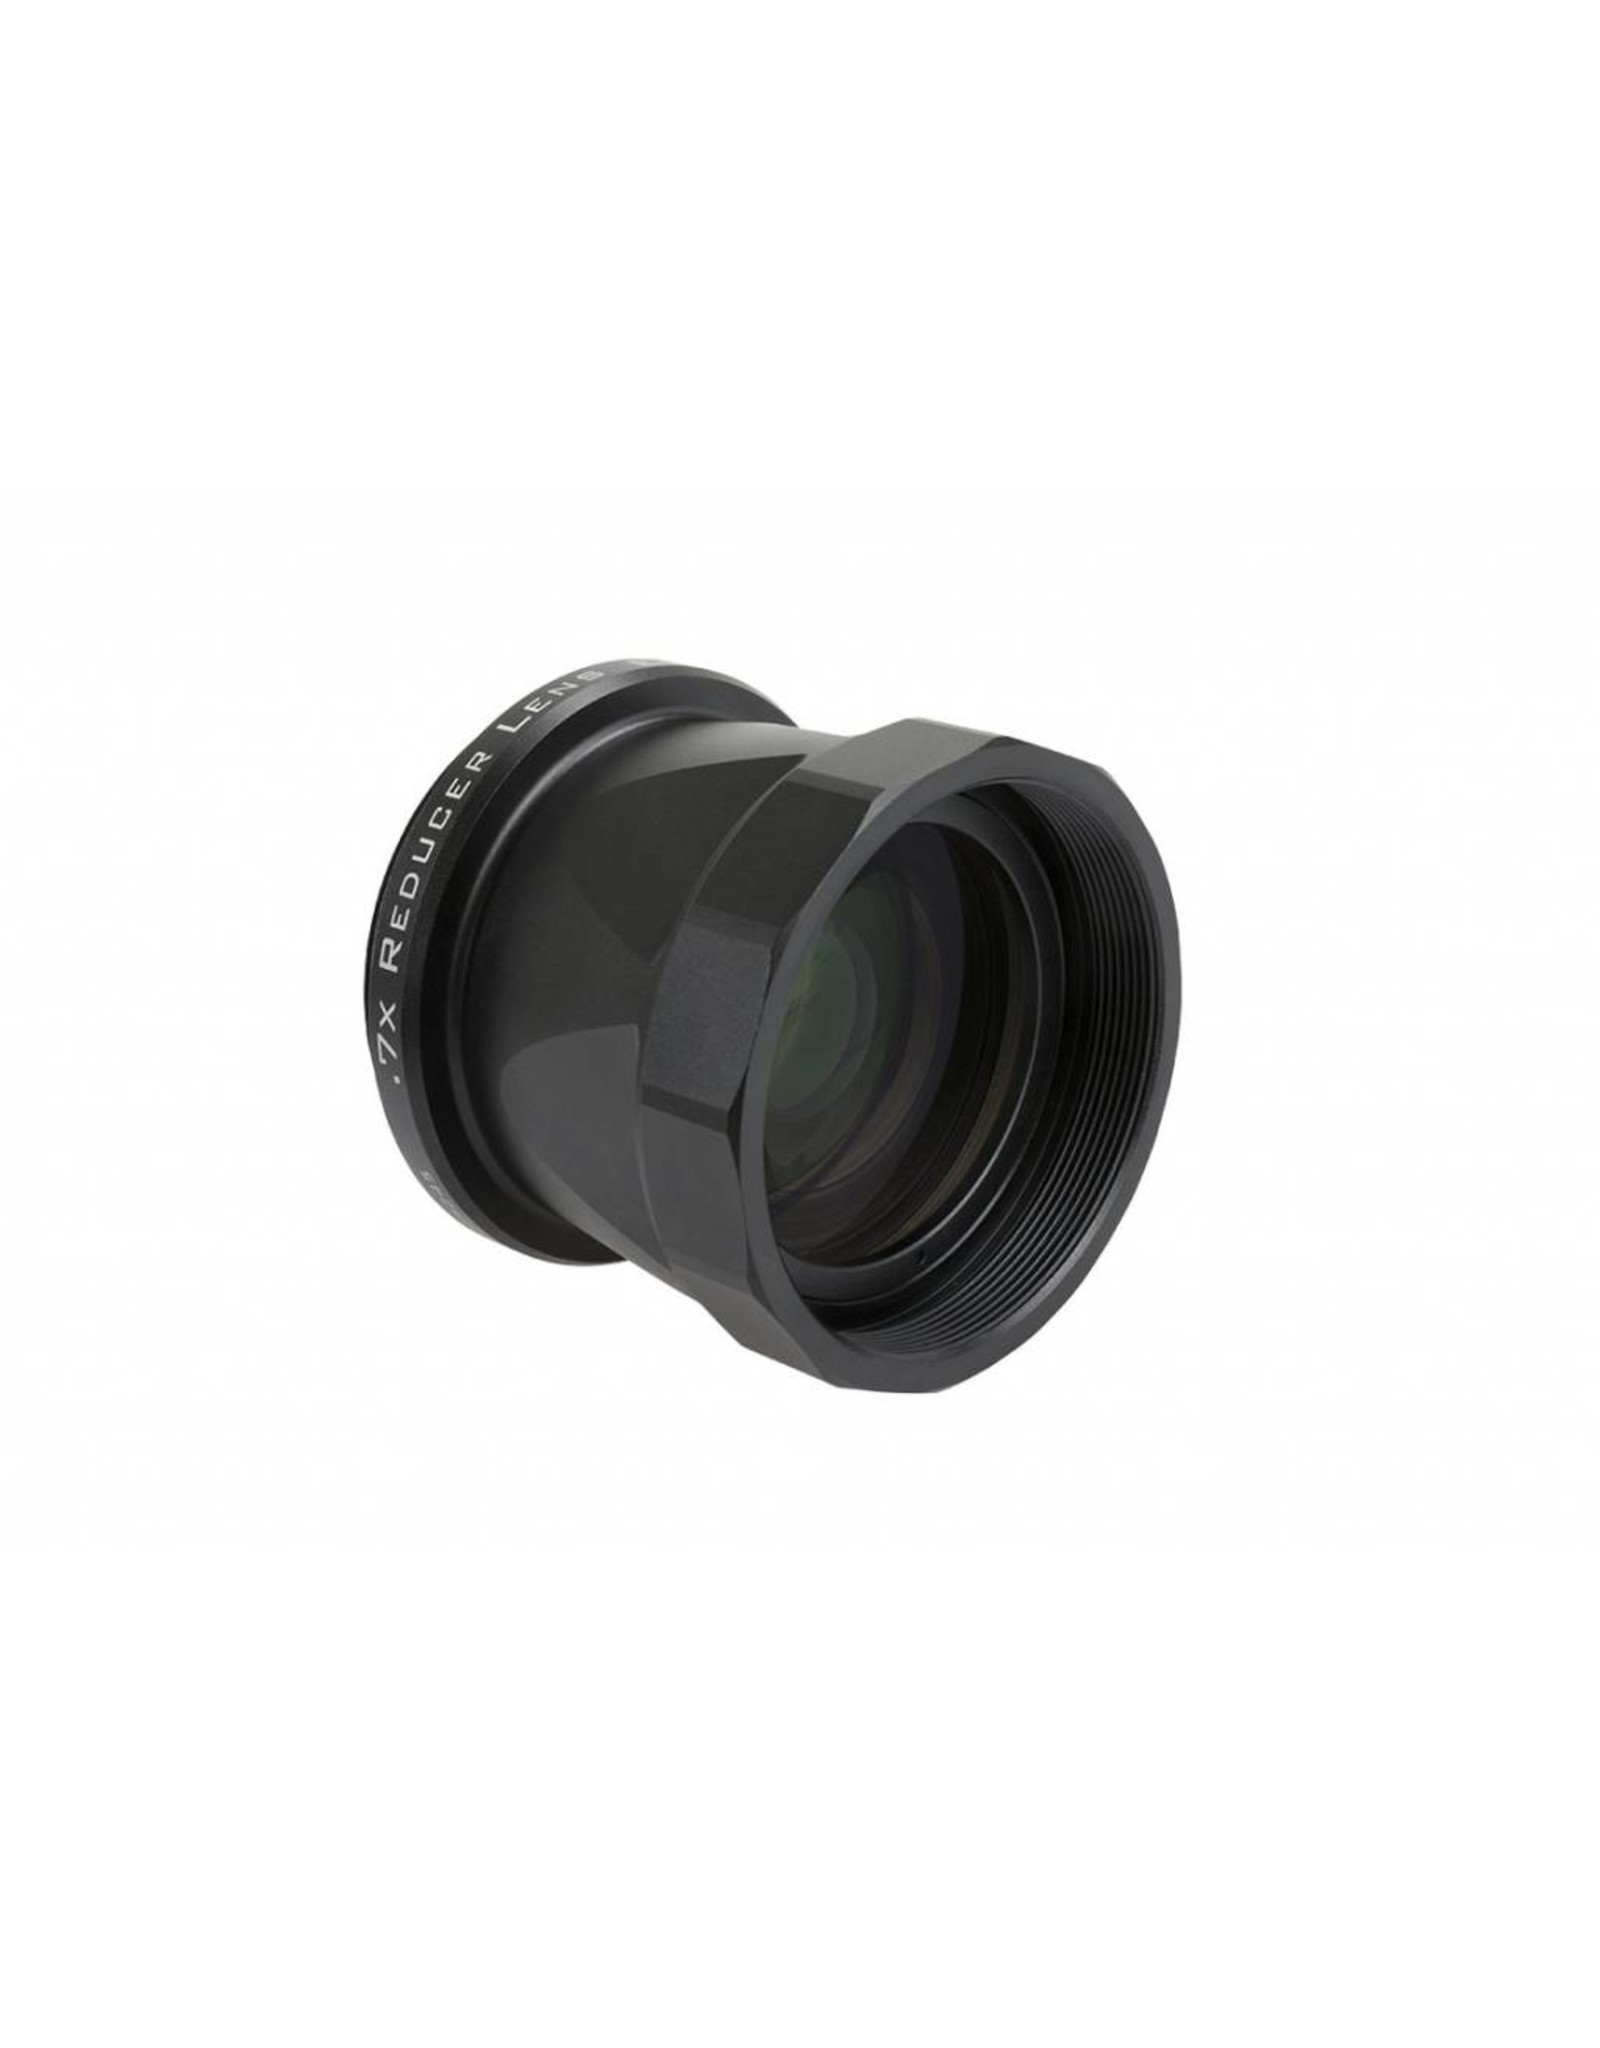 Celestron Celestron Reducer Lens .7x - EdgeHD 925